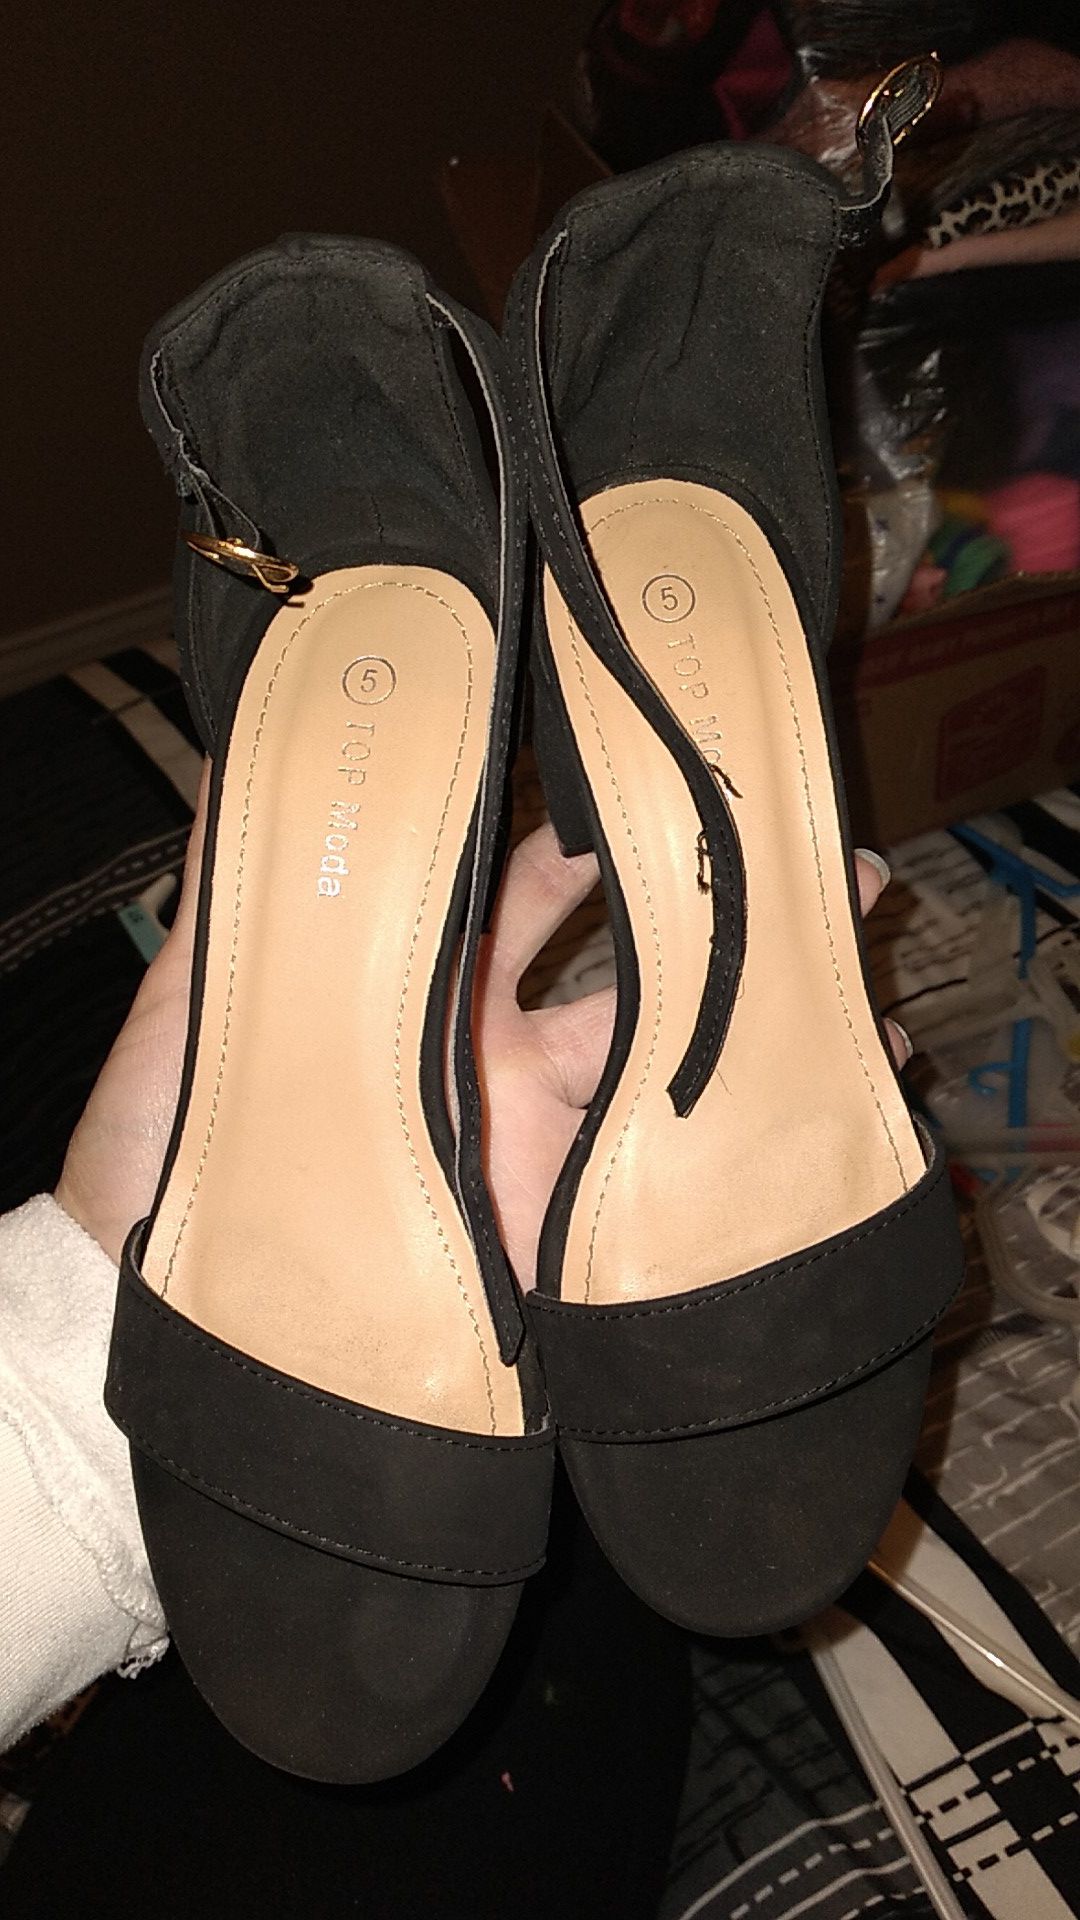 Girls heels size 5